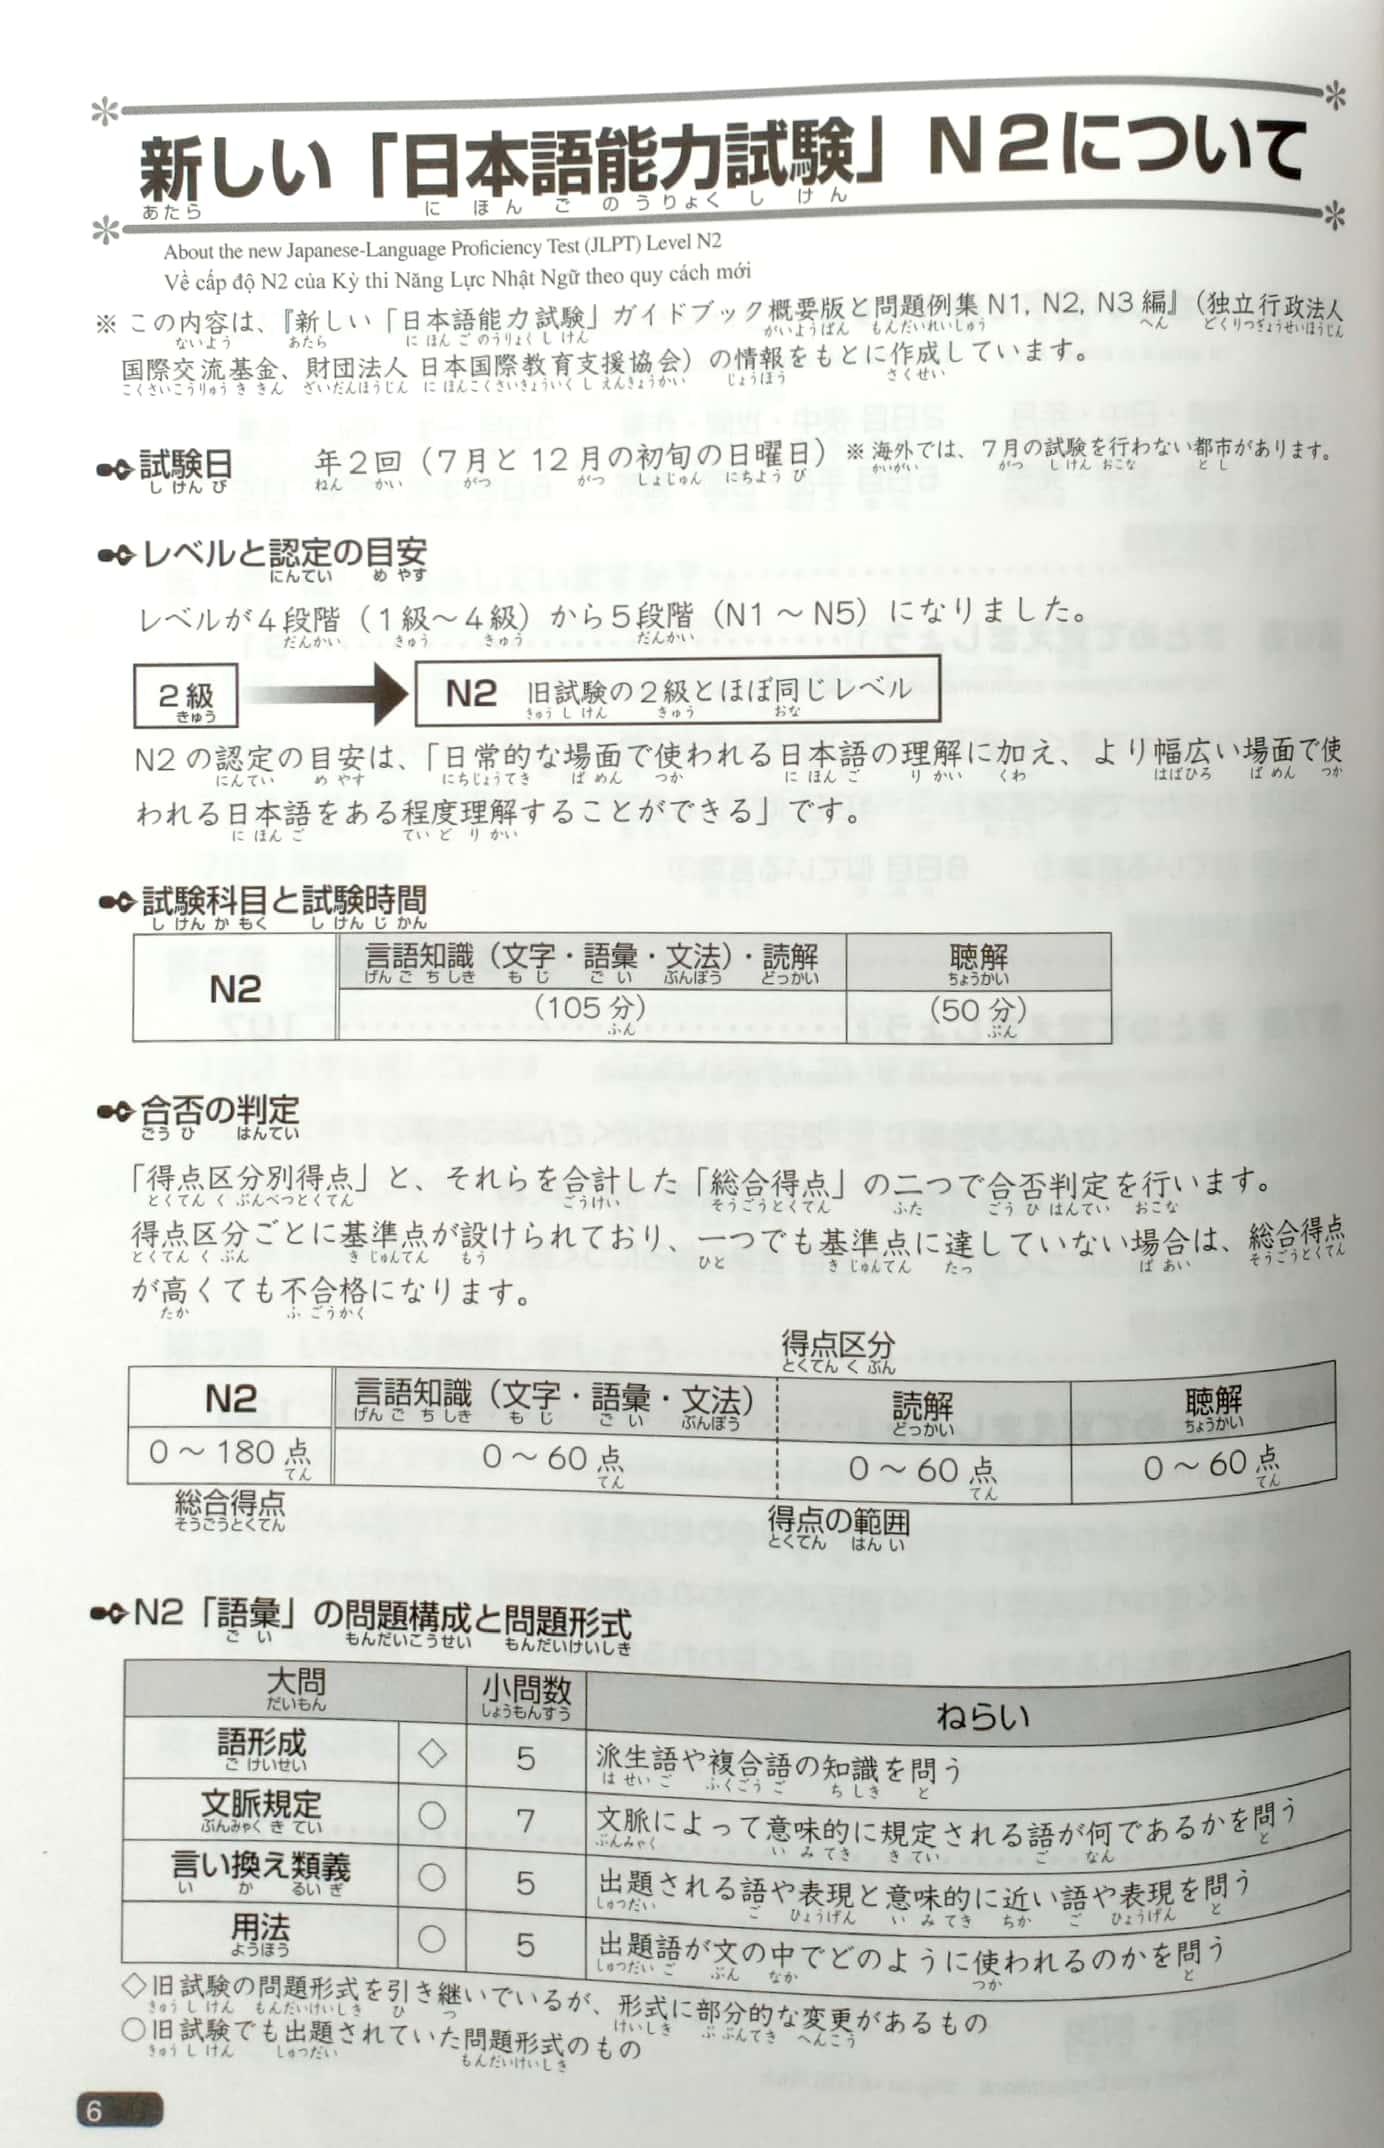 Jual Nihongo So-matome: N2, Vocab (Eng/Viet Trans.) (Japanese Edition)